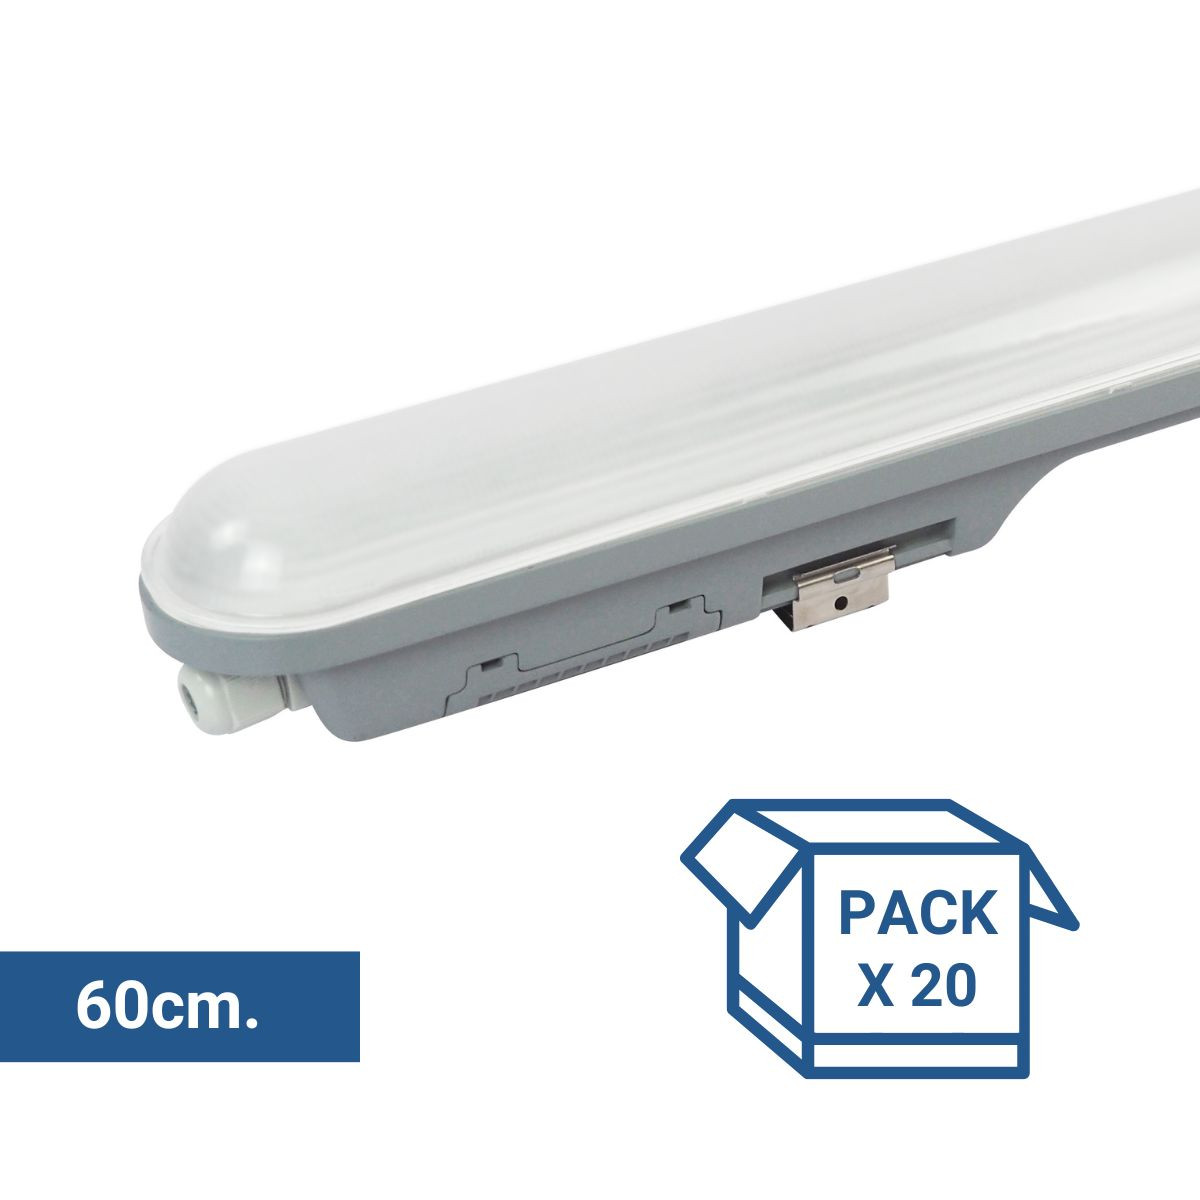 Pack x 20 - Linkable LED Tri-proof Batten linear fitting - 9W - 60cm - IP65 - 4000K